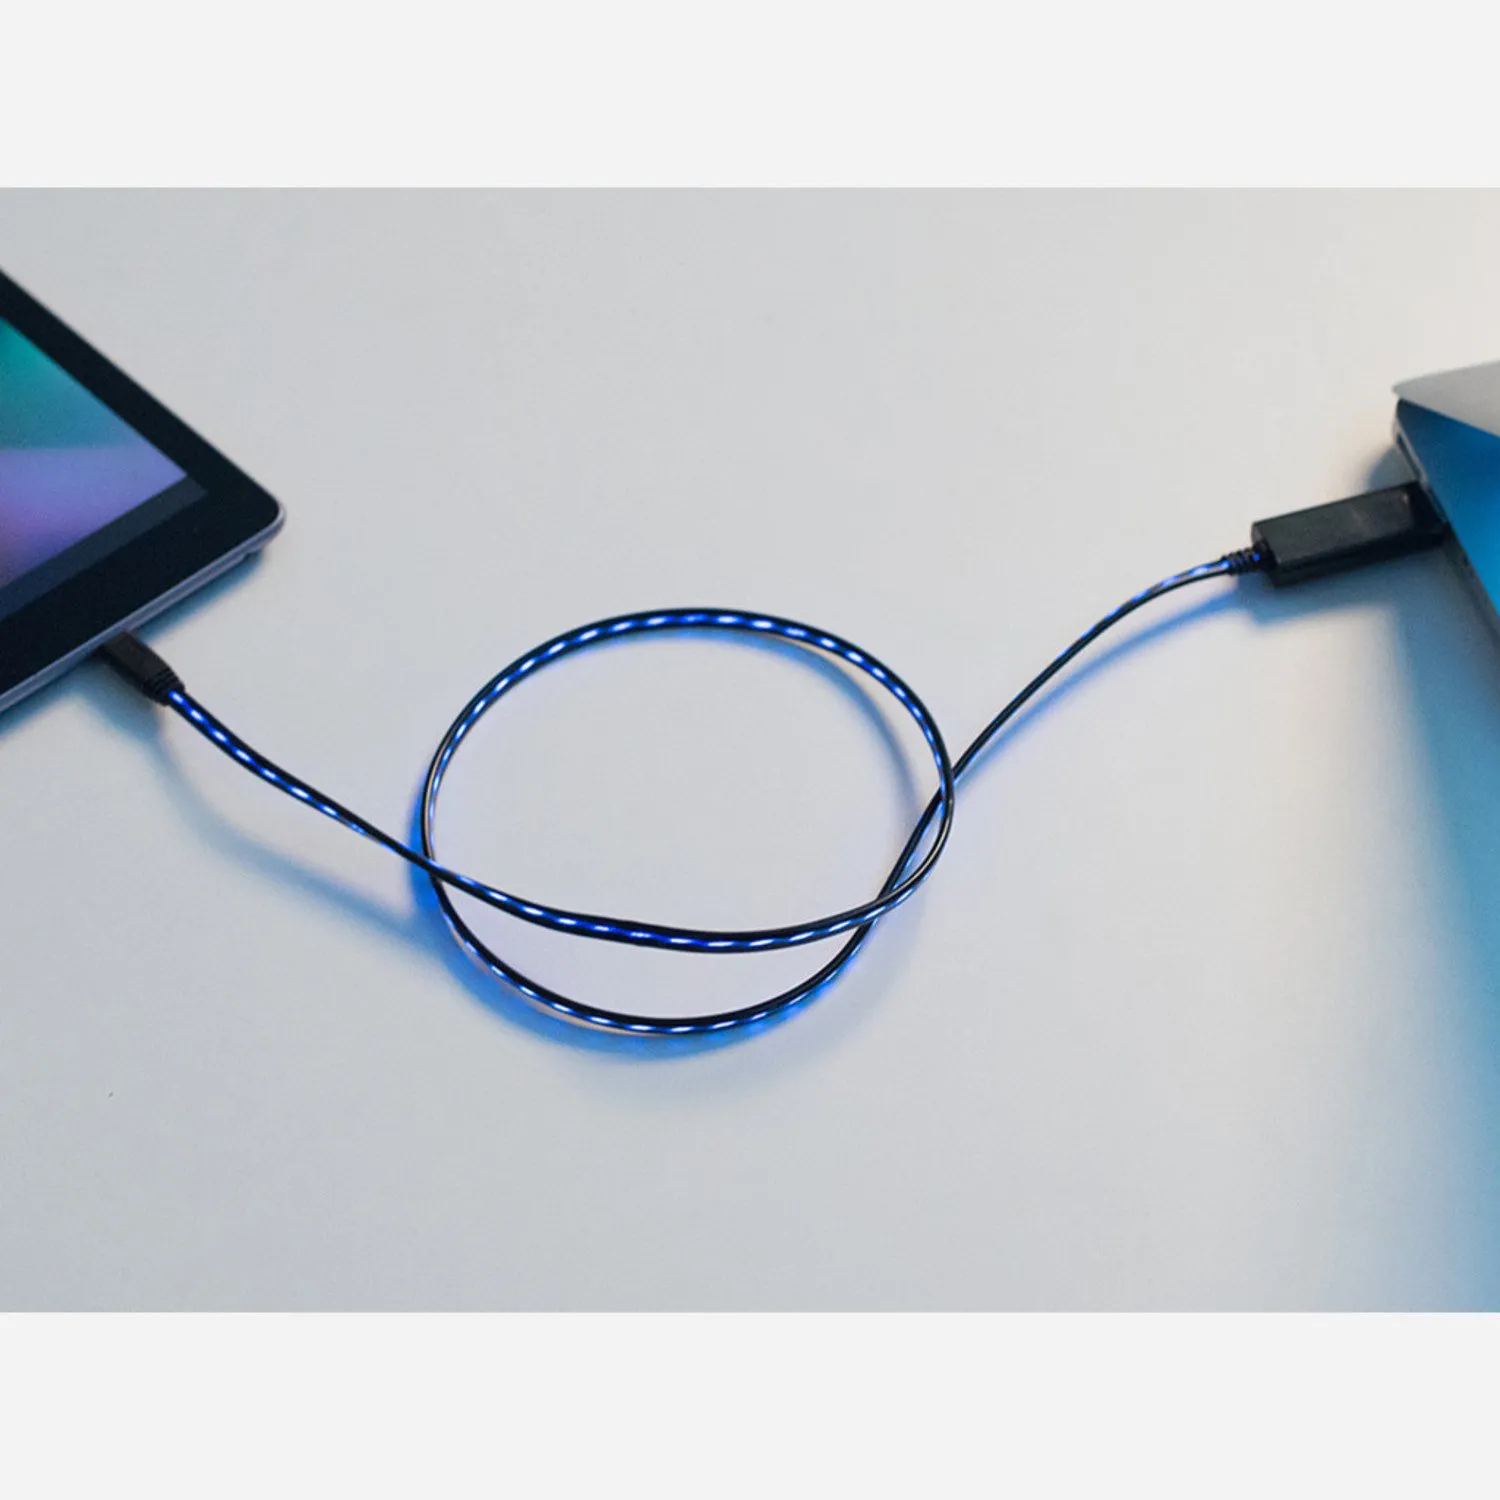 Photo of Flowing Effect MicroUSB Data+Charging Cable - Black w/Aqua EL